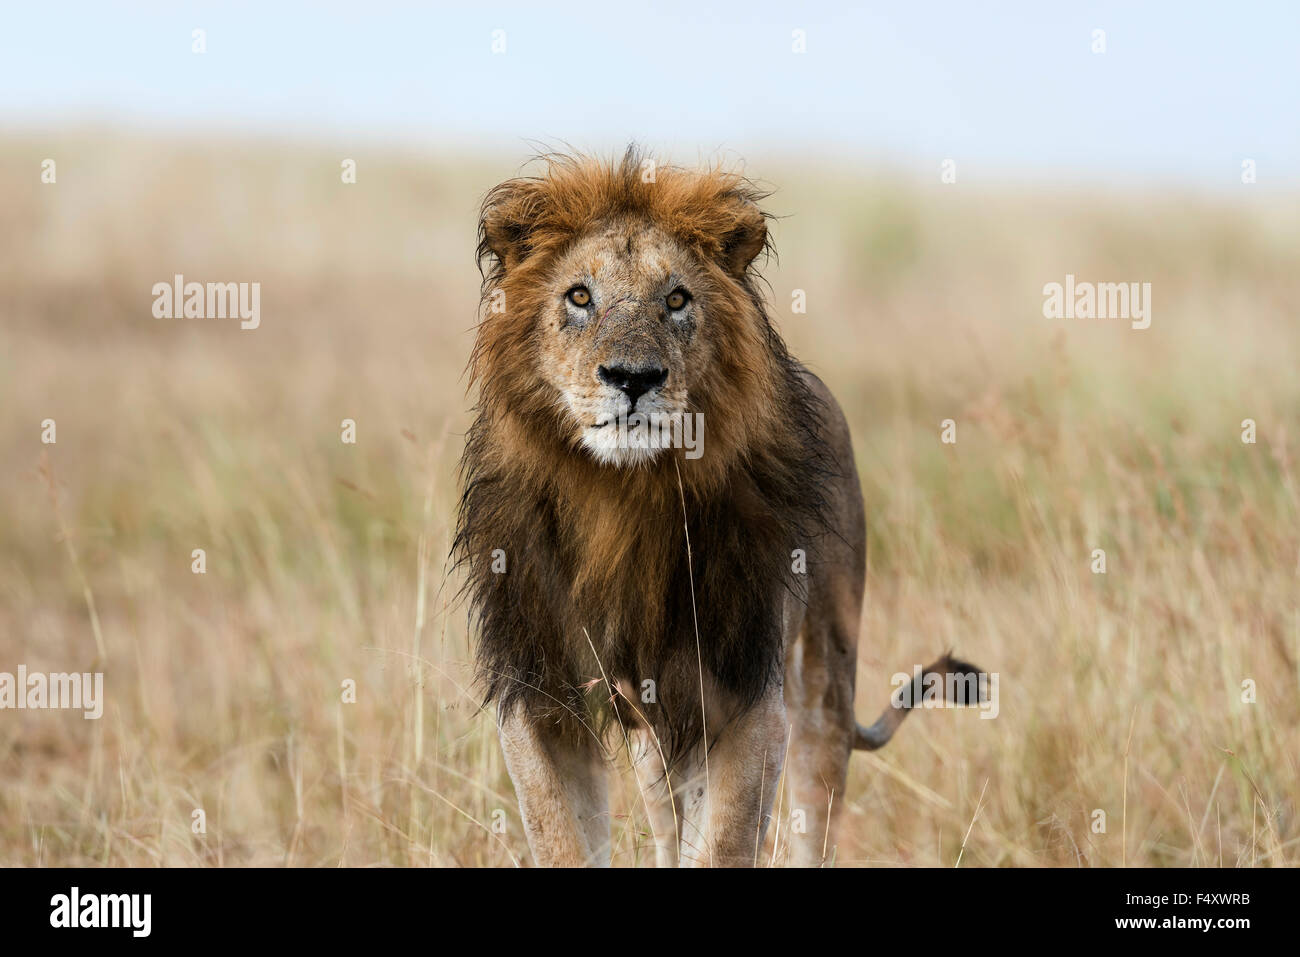 Wet lion (Panthera leo), homme, Masai Mara, Kenya, comté de Narok Banque D'Images